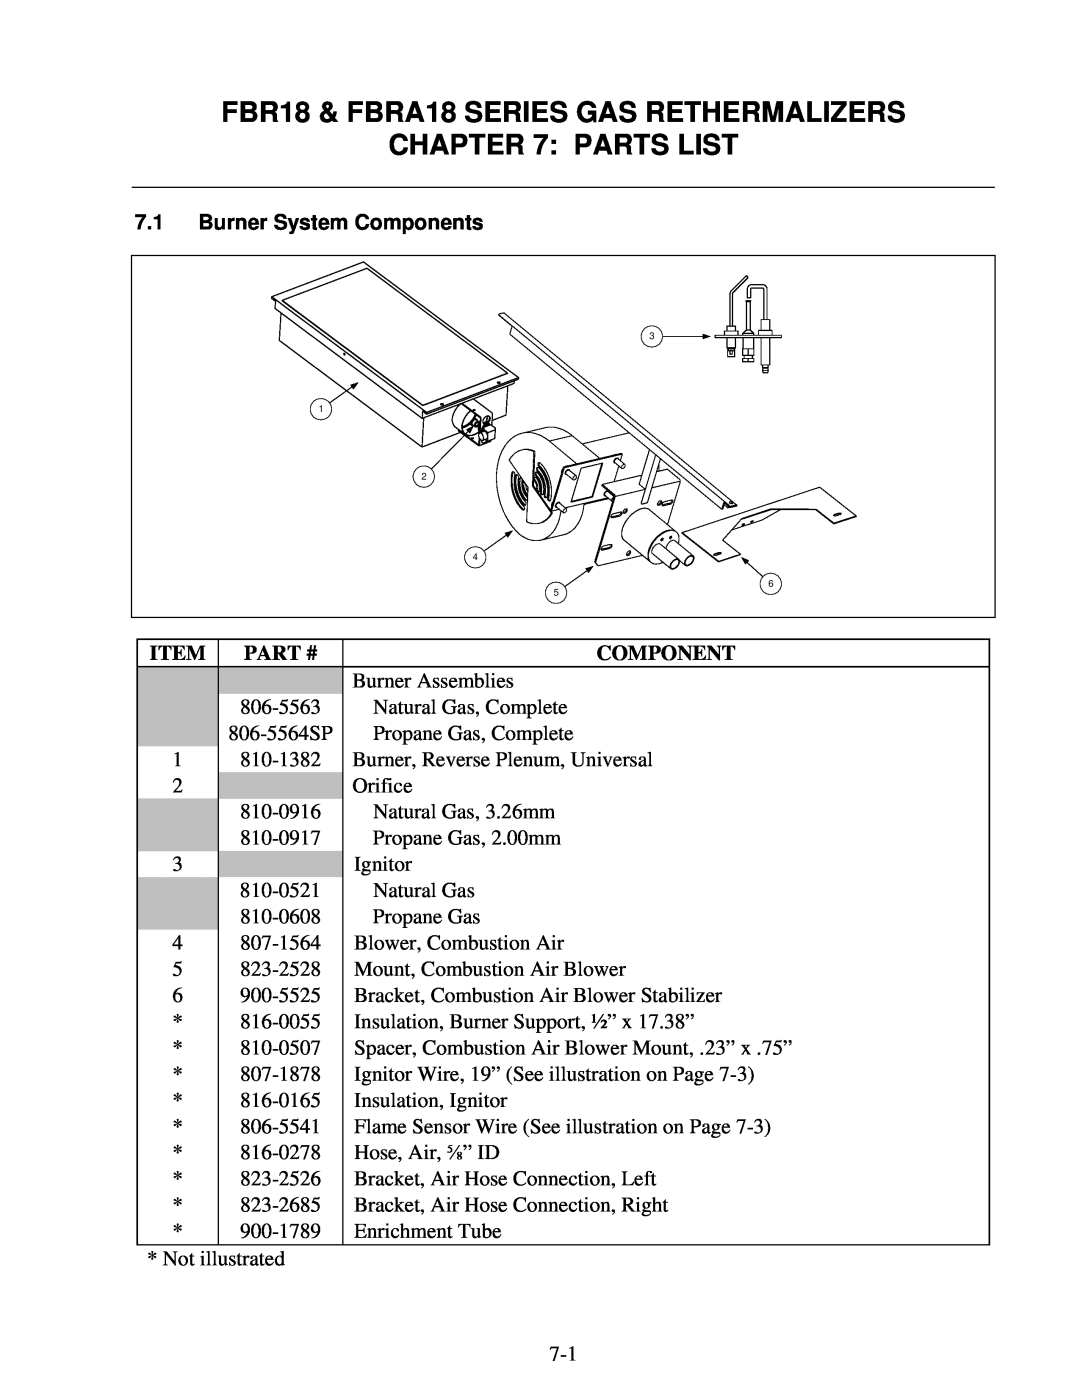 Frymaster FBR18 Series manual Parts List, 7.1Burner System Components, Part #, FBR18 & FBRA18 SERIES GAS RETHERMALIZERS 